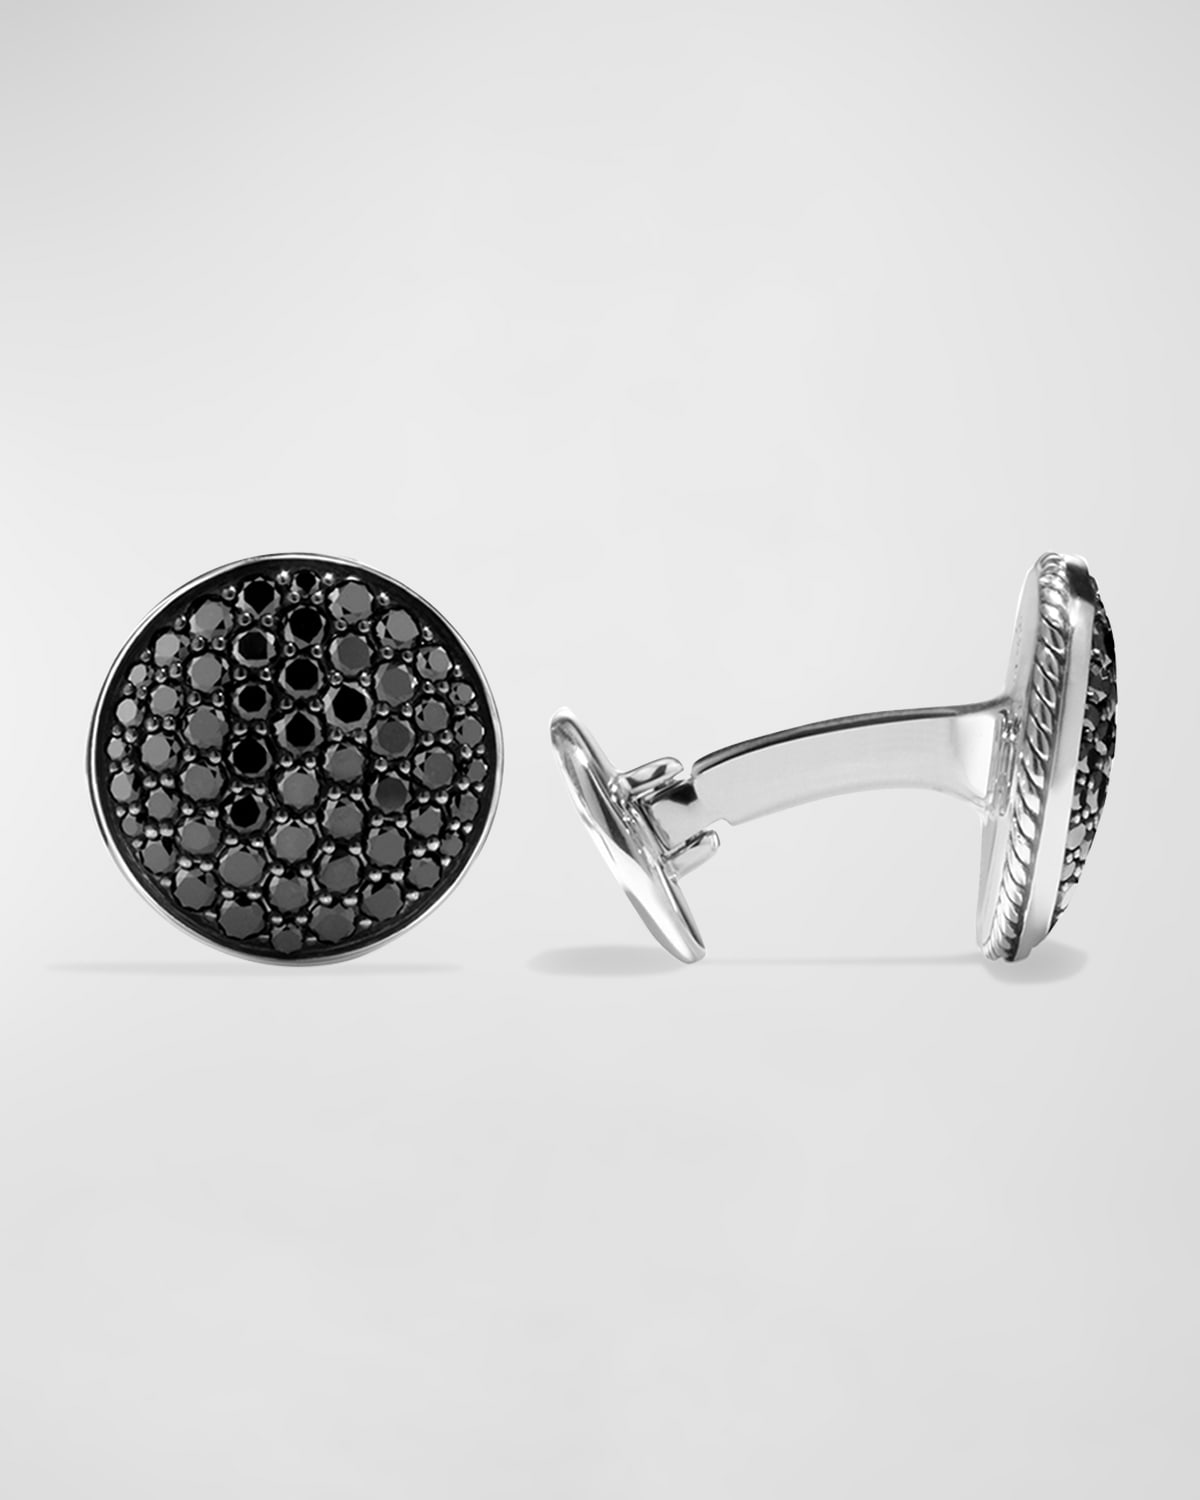 David Yurman Men's Streamline Cufflinks with Diamonds in Silver, 16.7mm